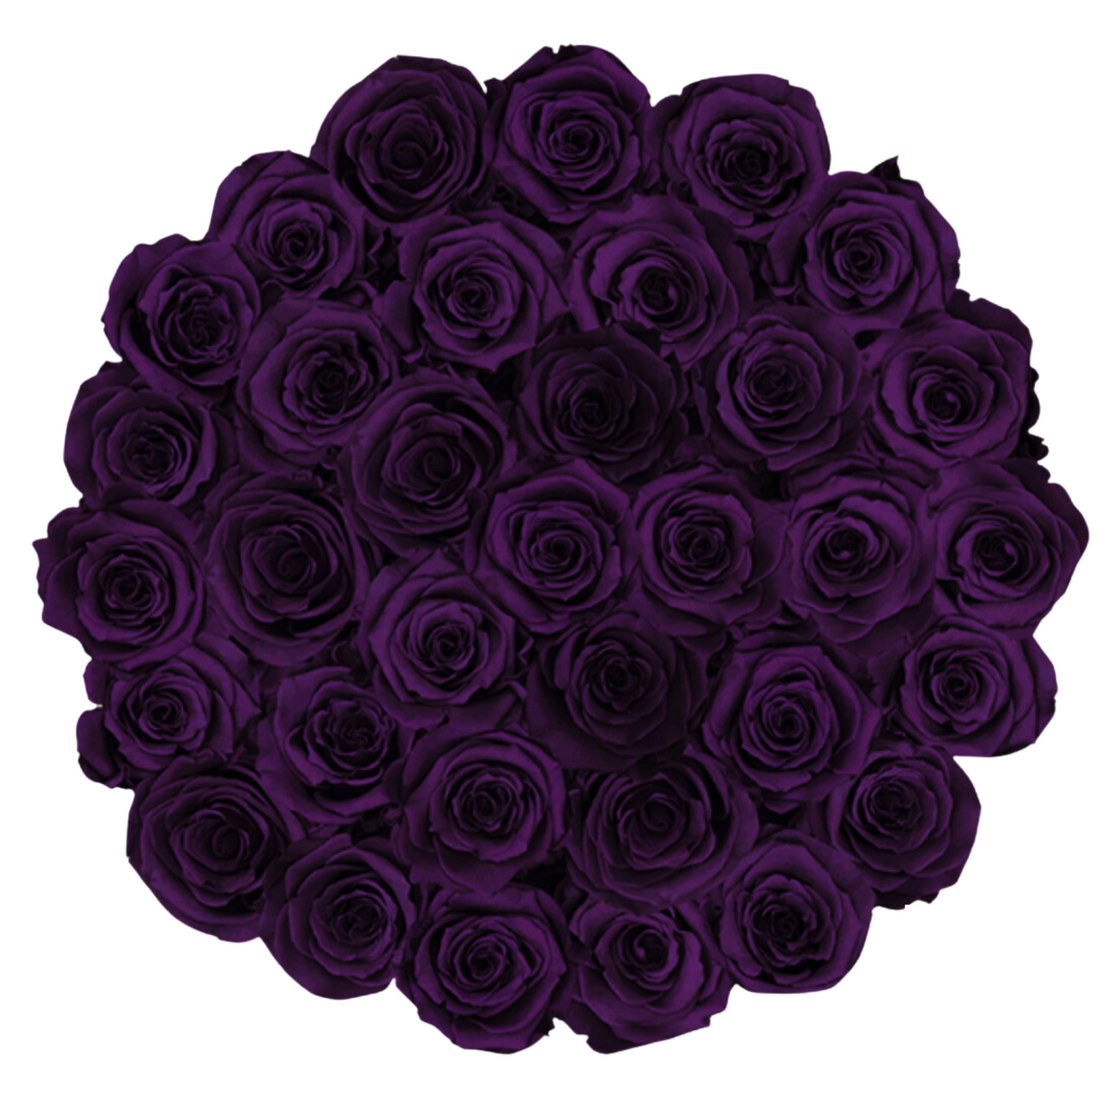 Grande Round - Black Velvet by La Fleur Lifetime Flowers